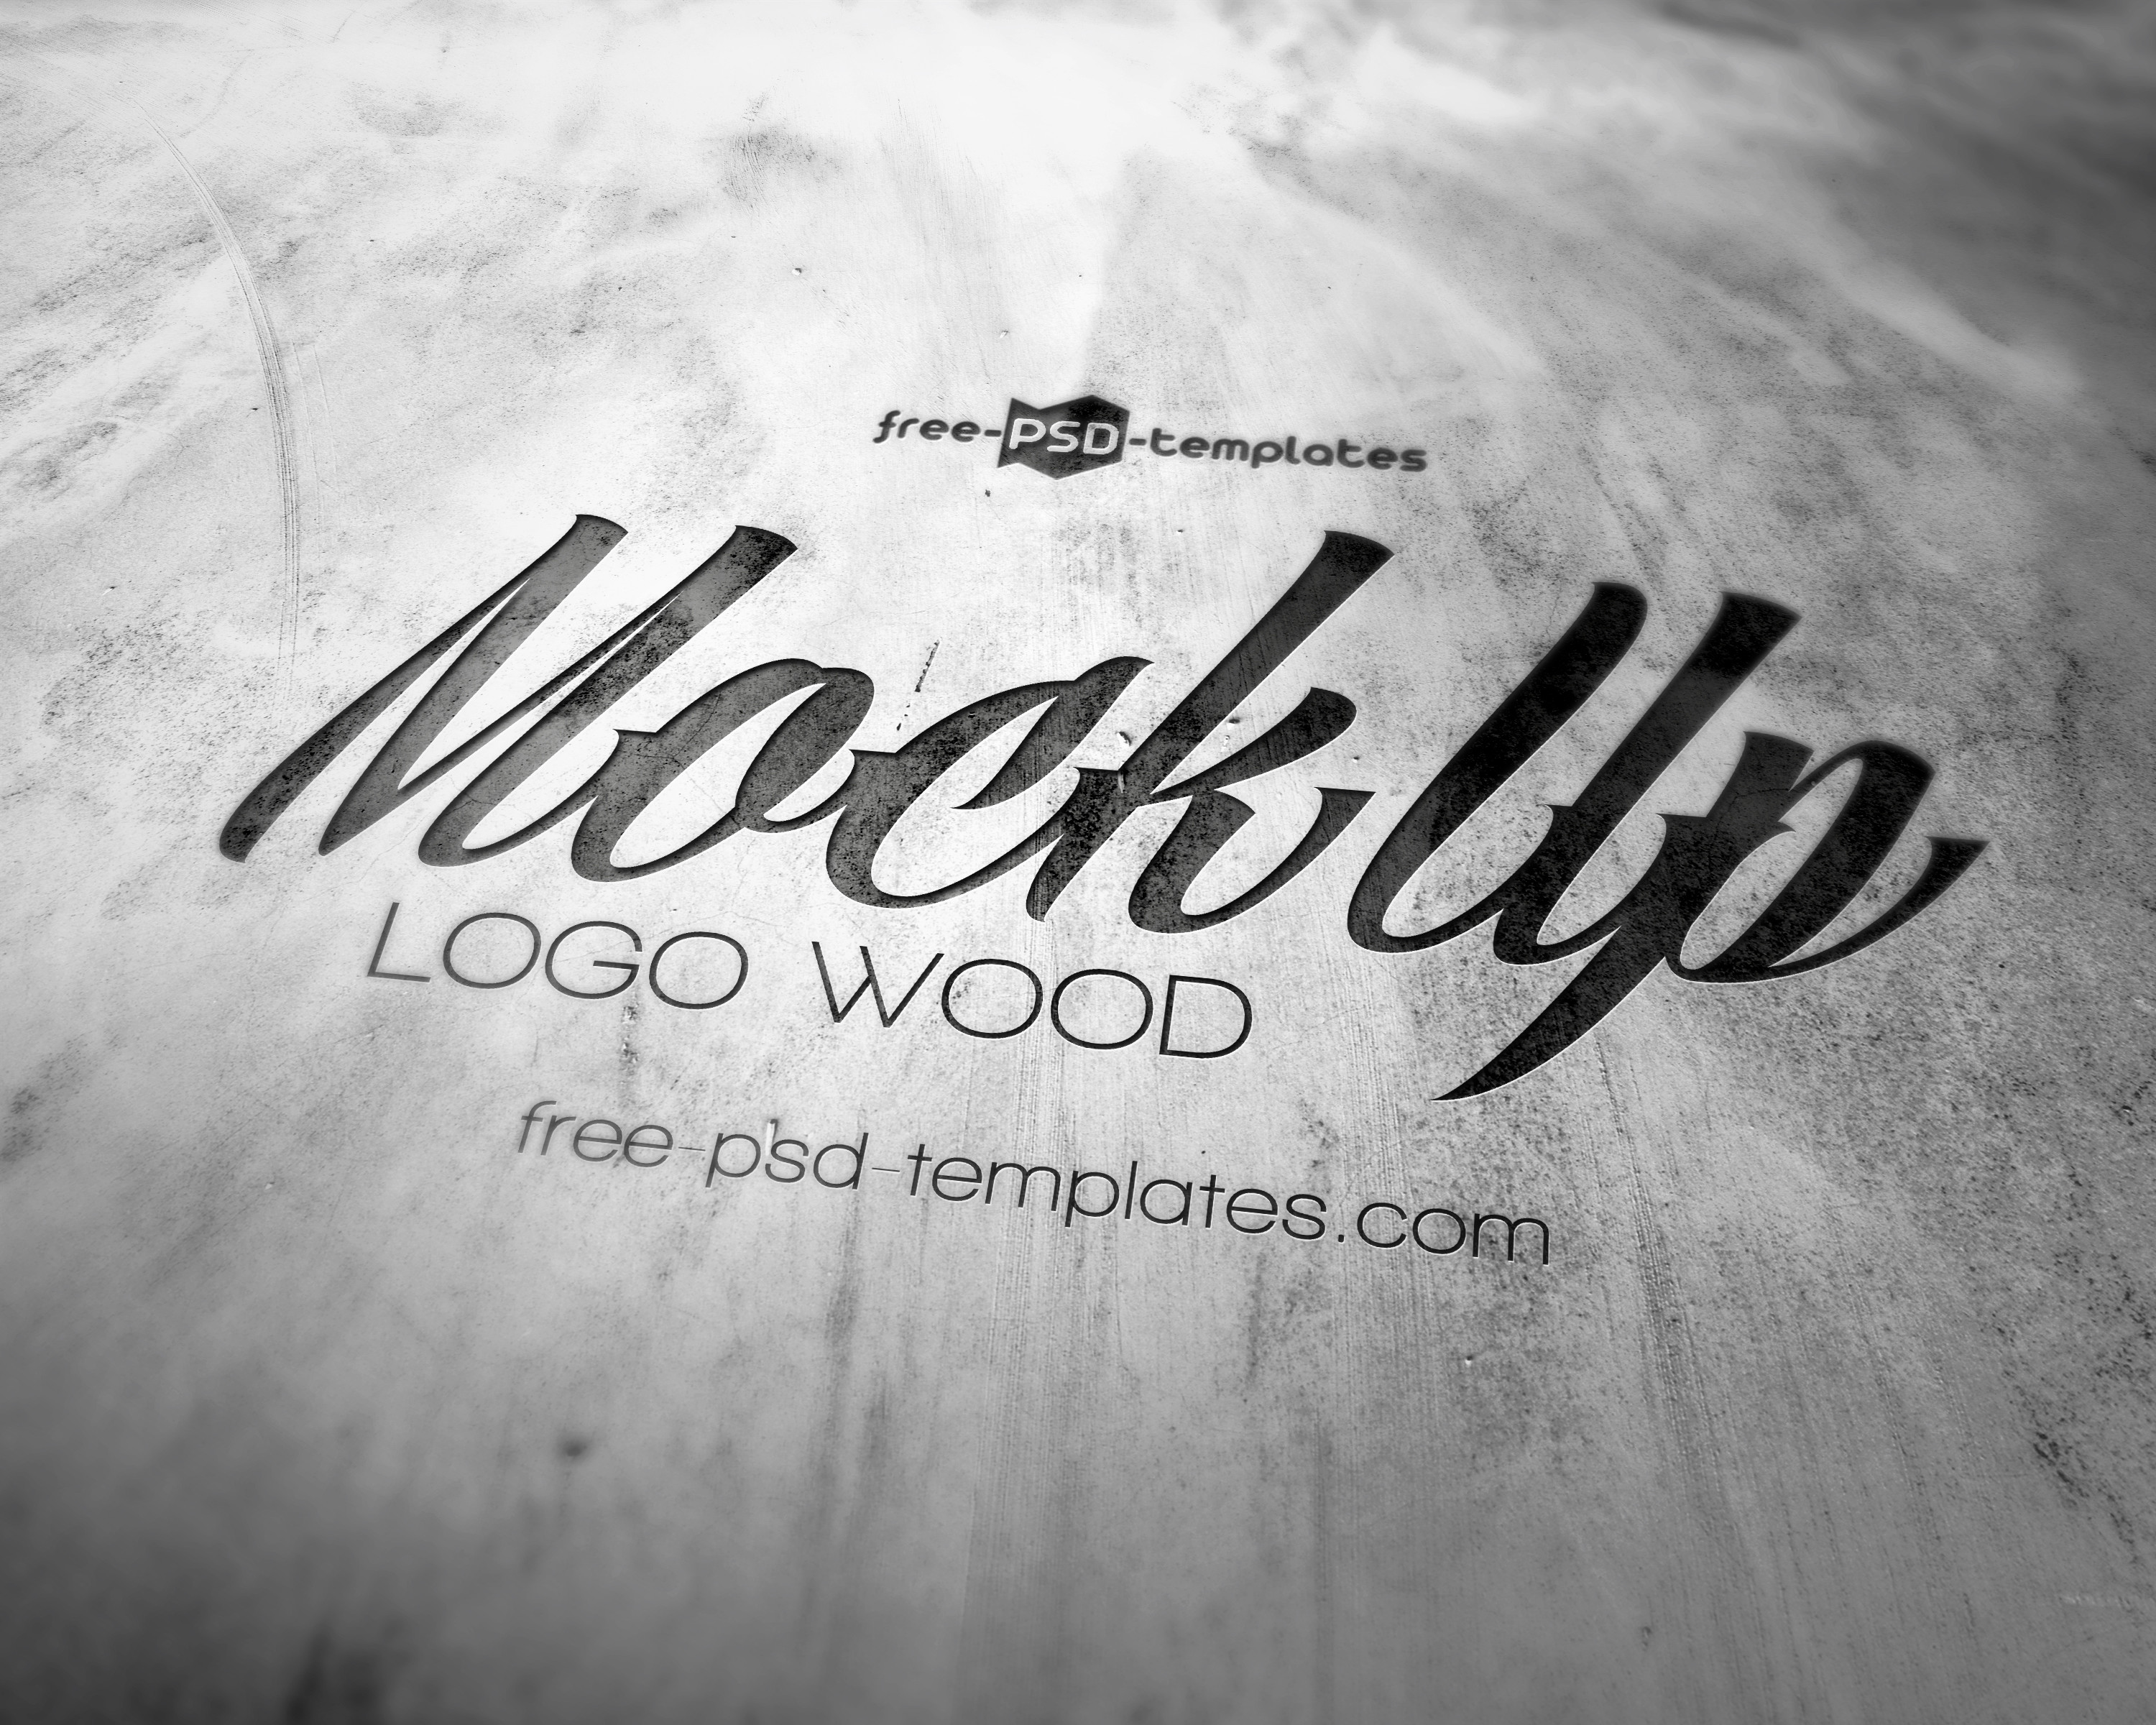 MockUp_2_logo_wood